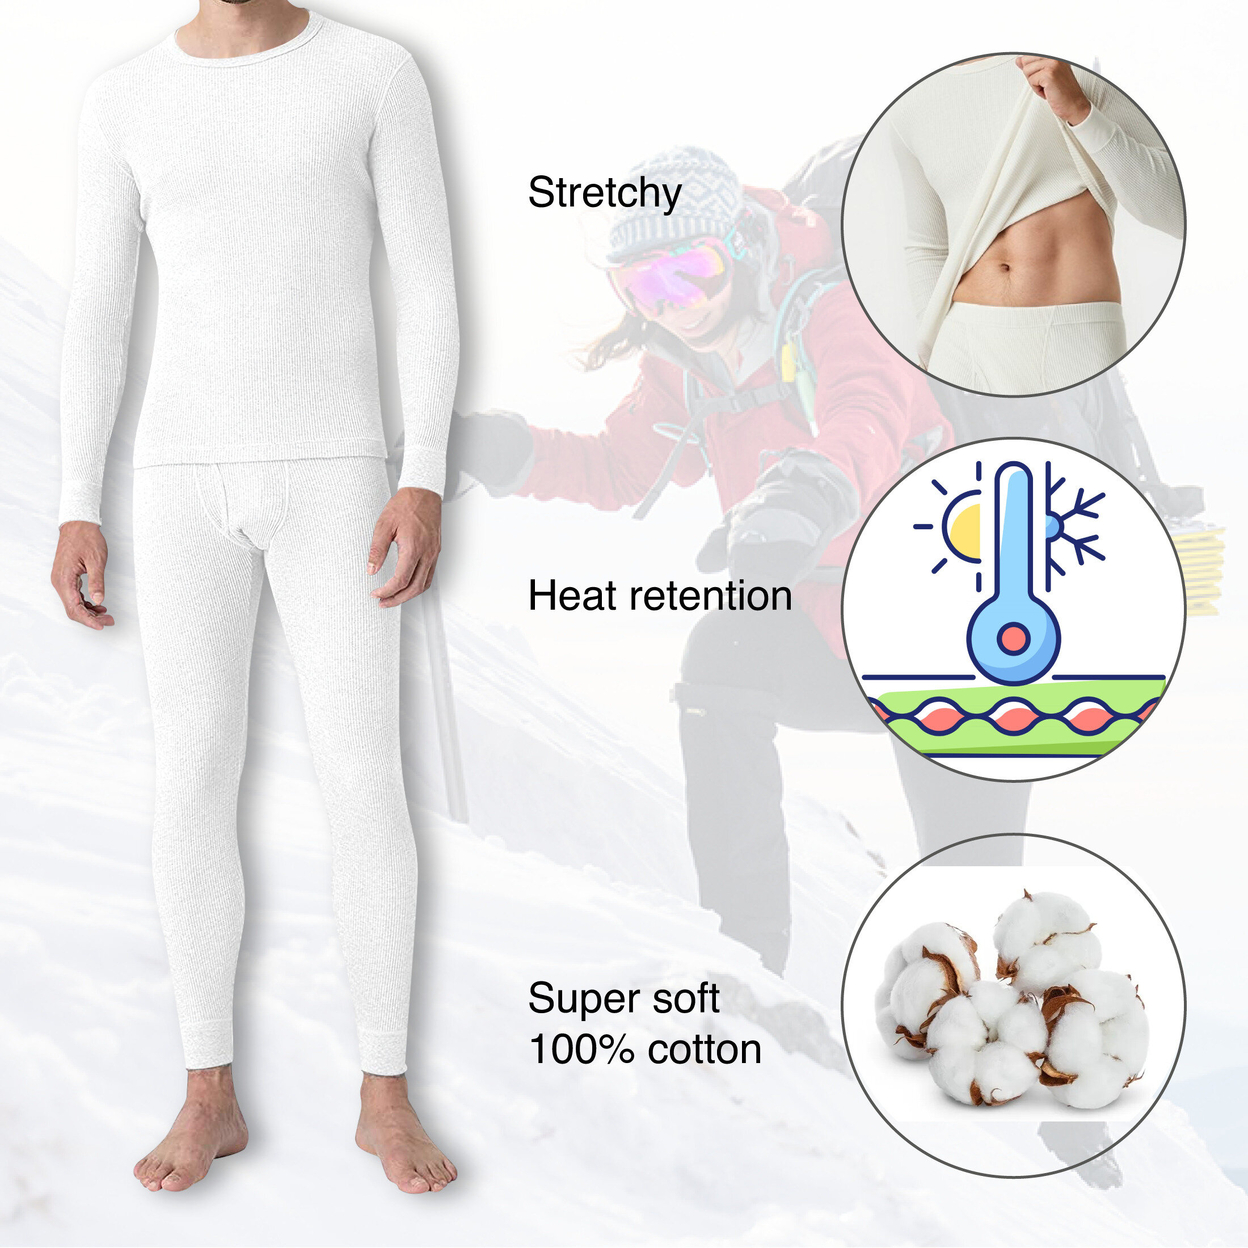 Multi-Set: Men's Super-Soft Cotton Waffle Knit Winter Thermal Underwear Set - 2-pack, Small